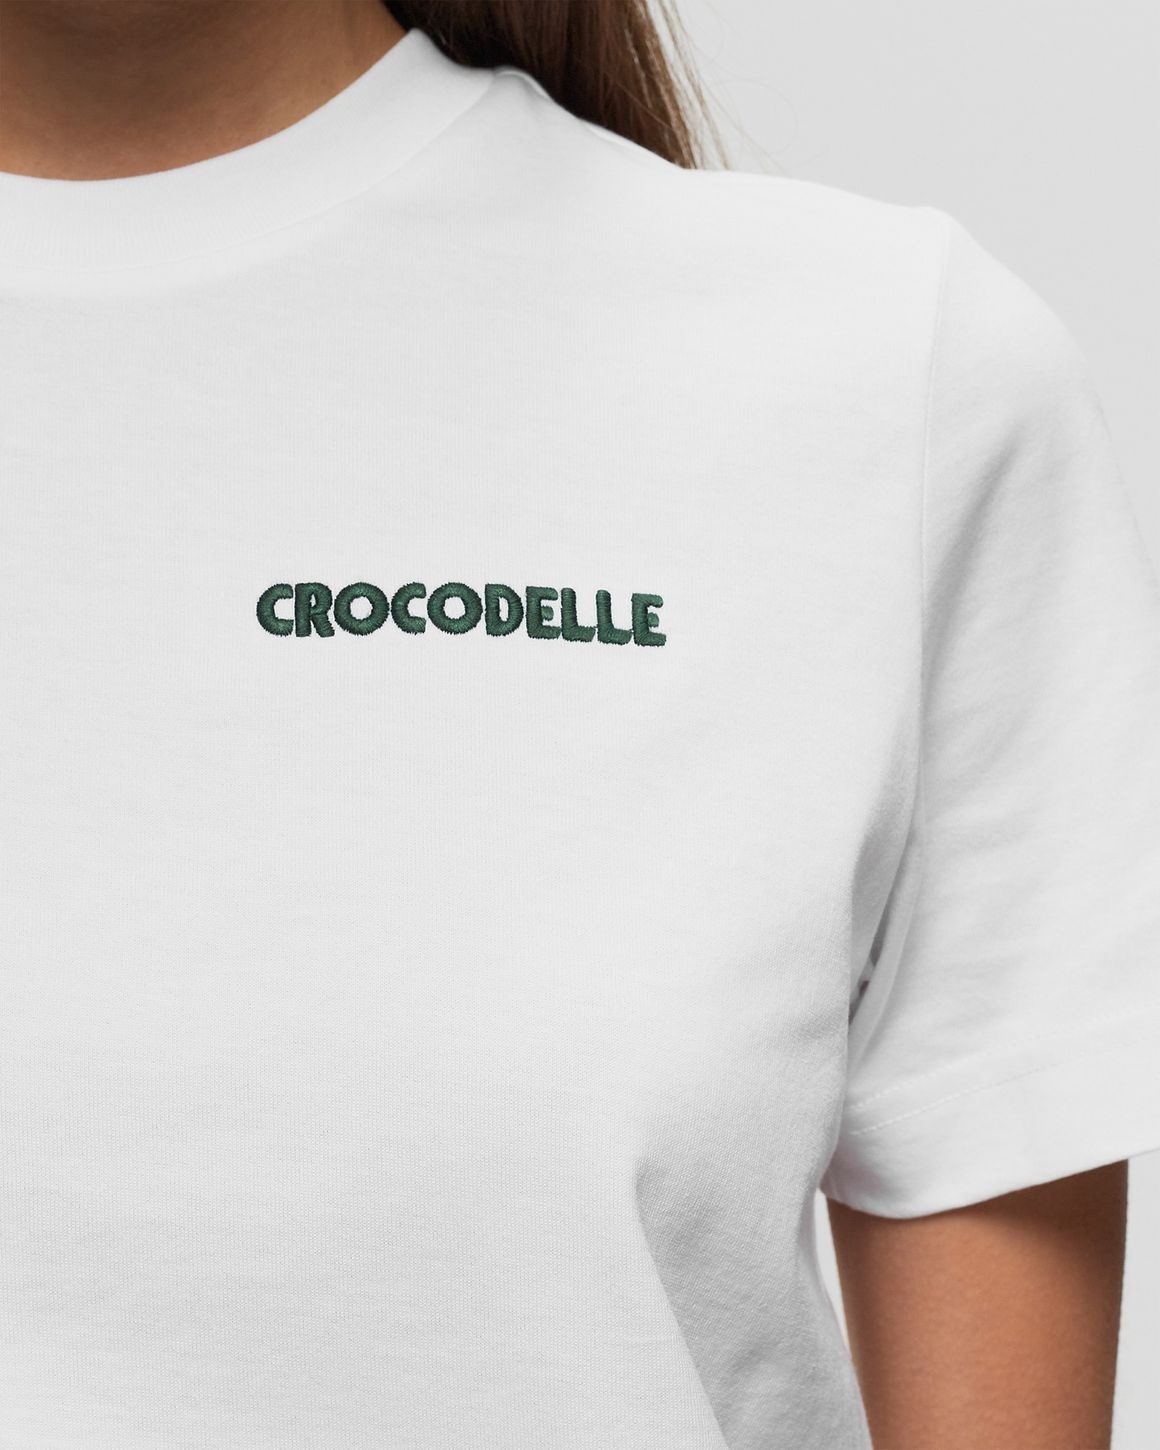 CROCODELLE T-SHIRT - 3